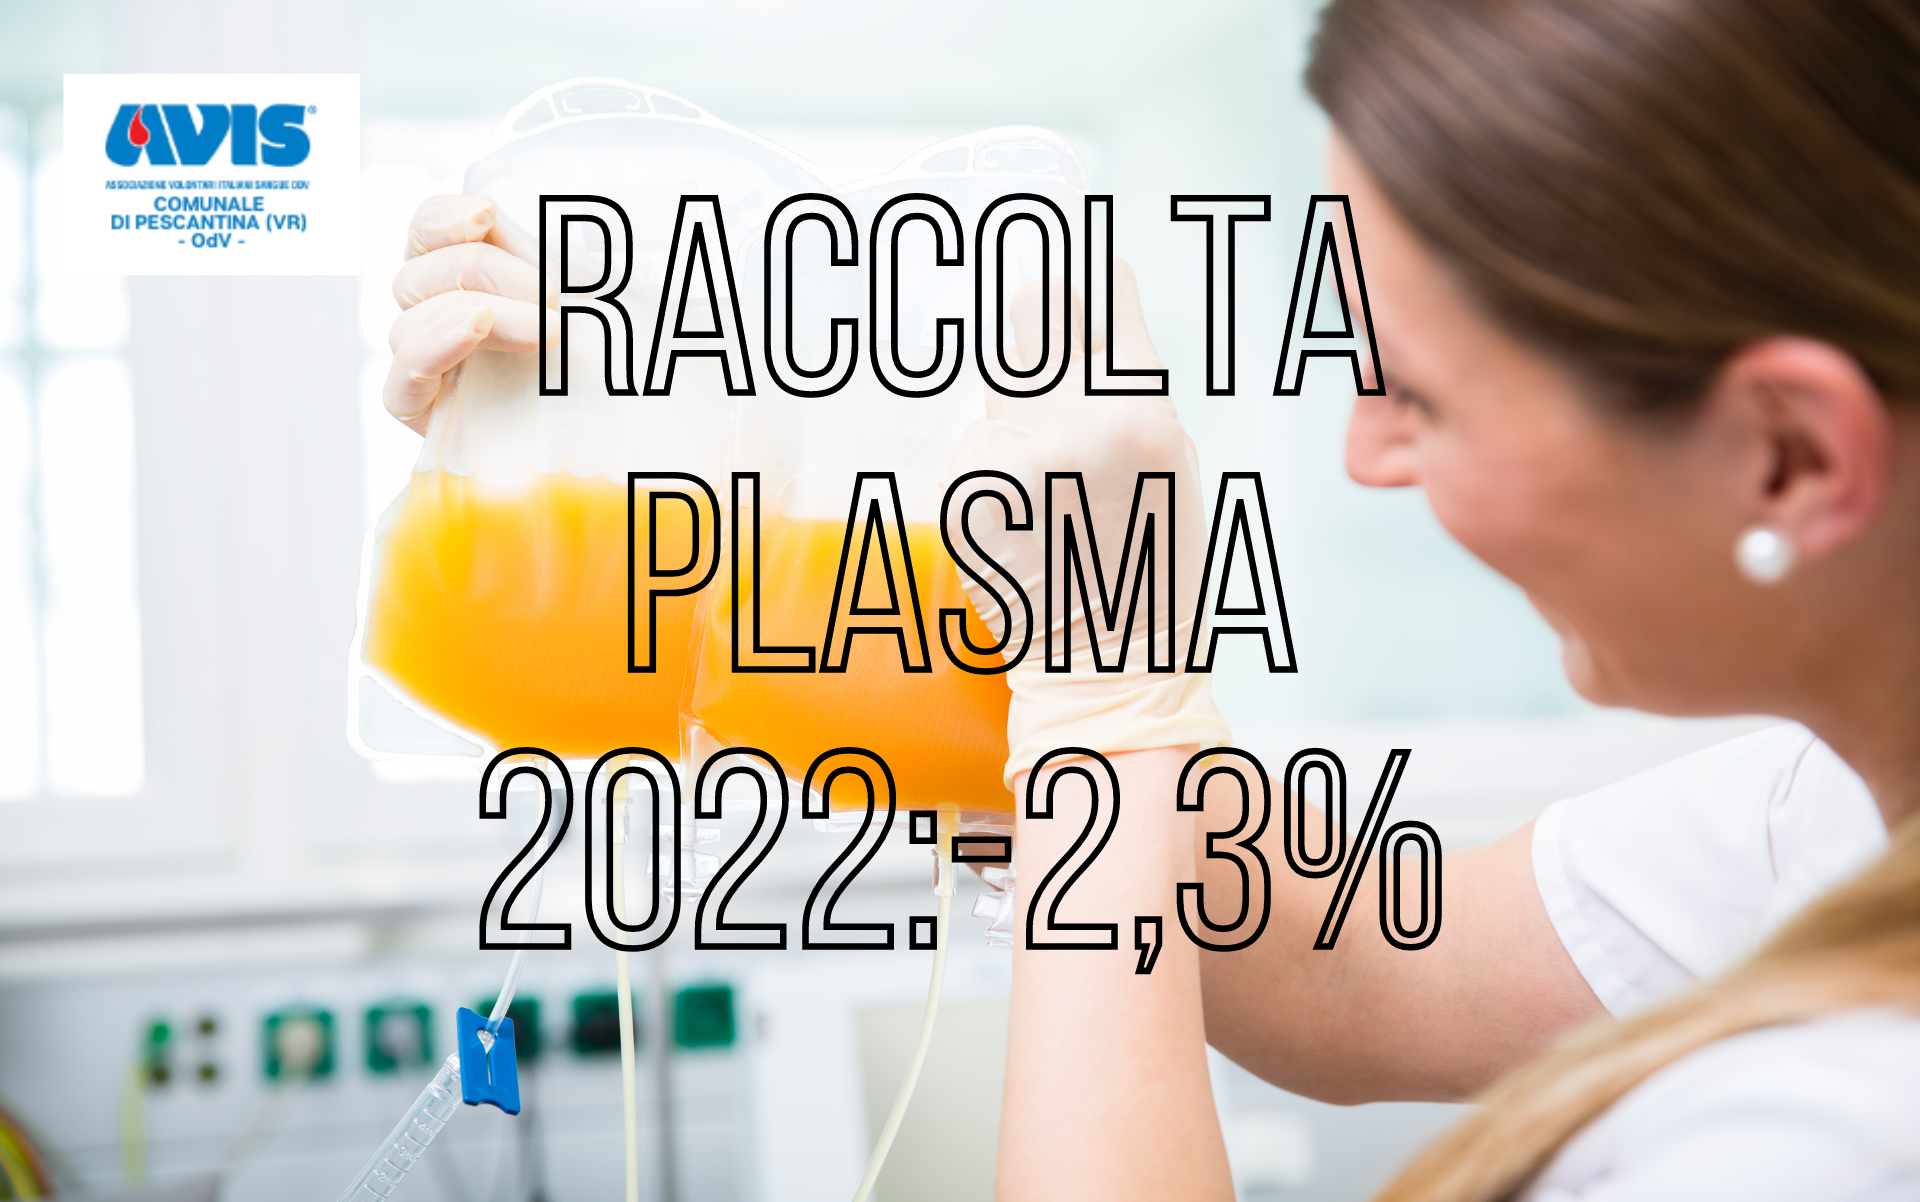 avis_pescantina_raccolta_plasma_2022